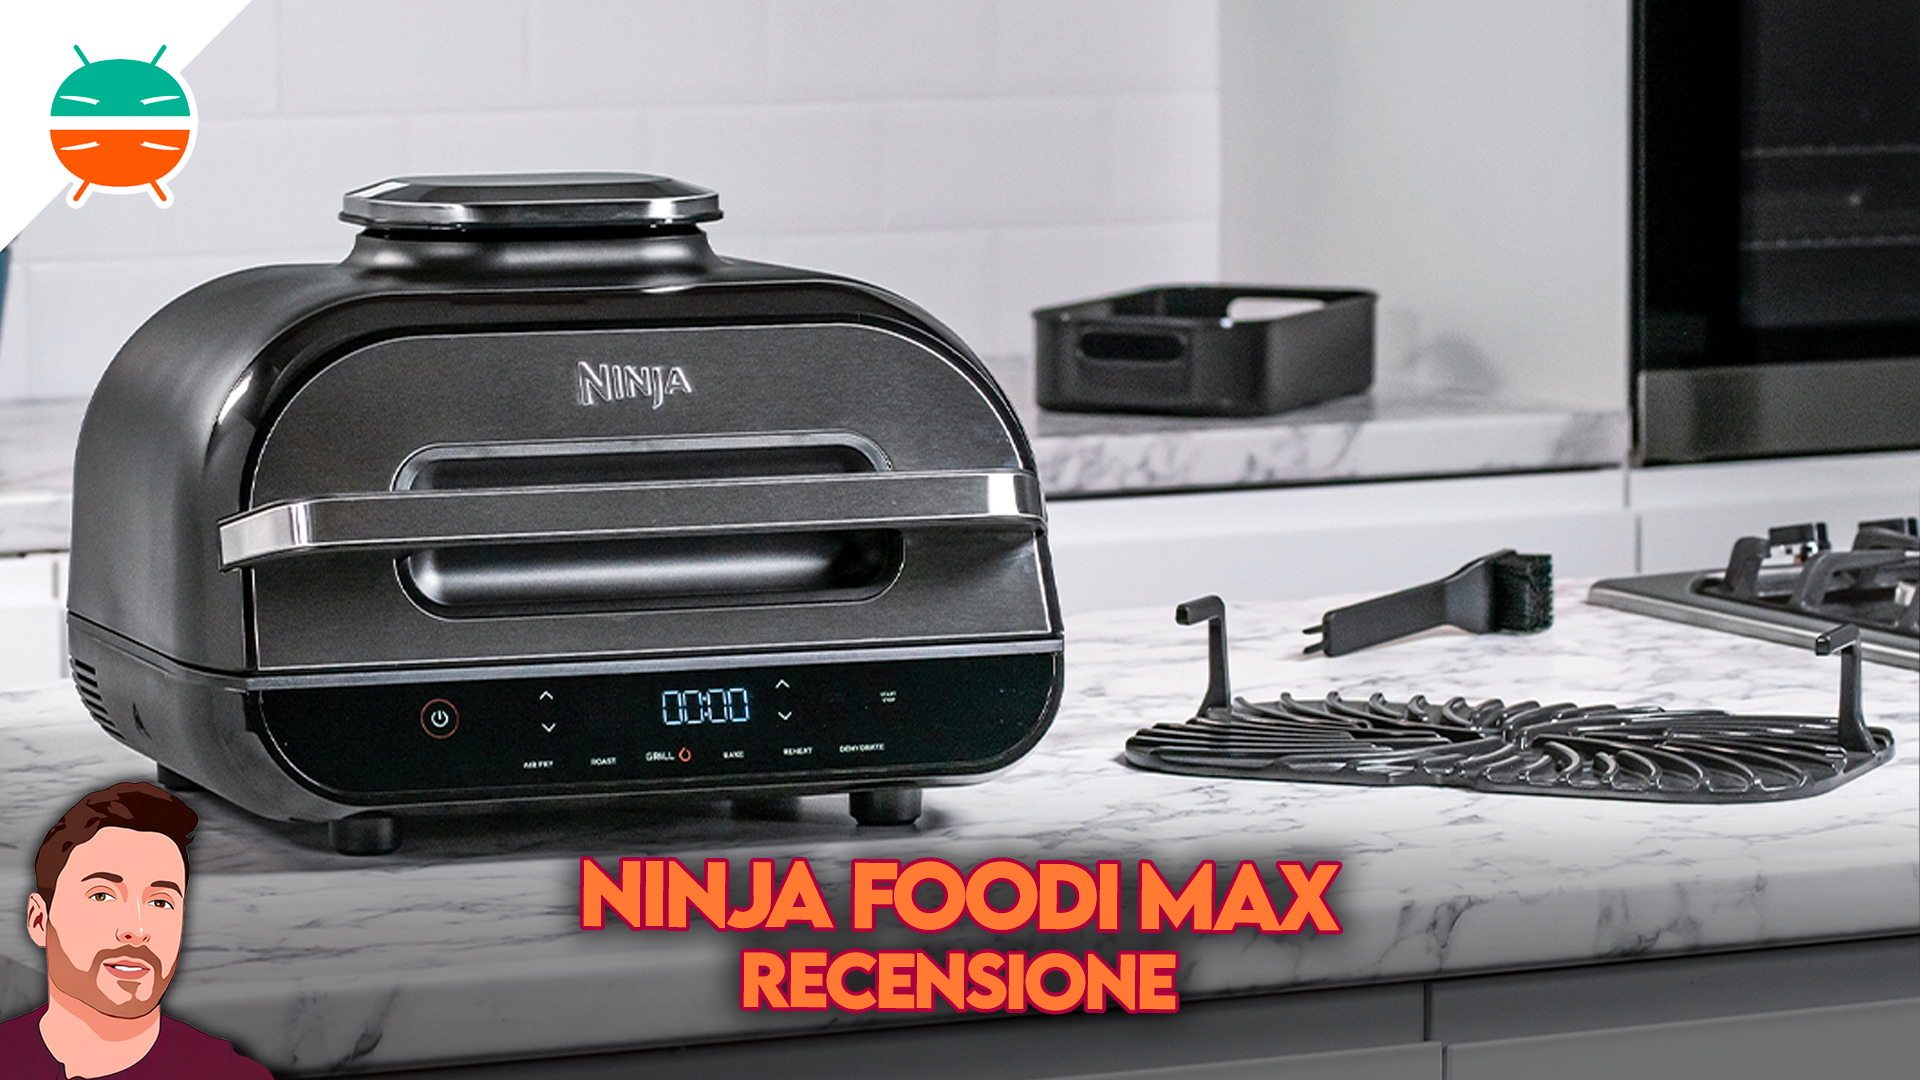 Ninja Foodi Max review: much more than an air fryer - GizChina.it